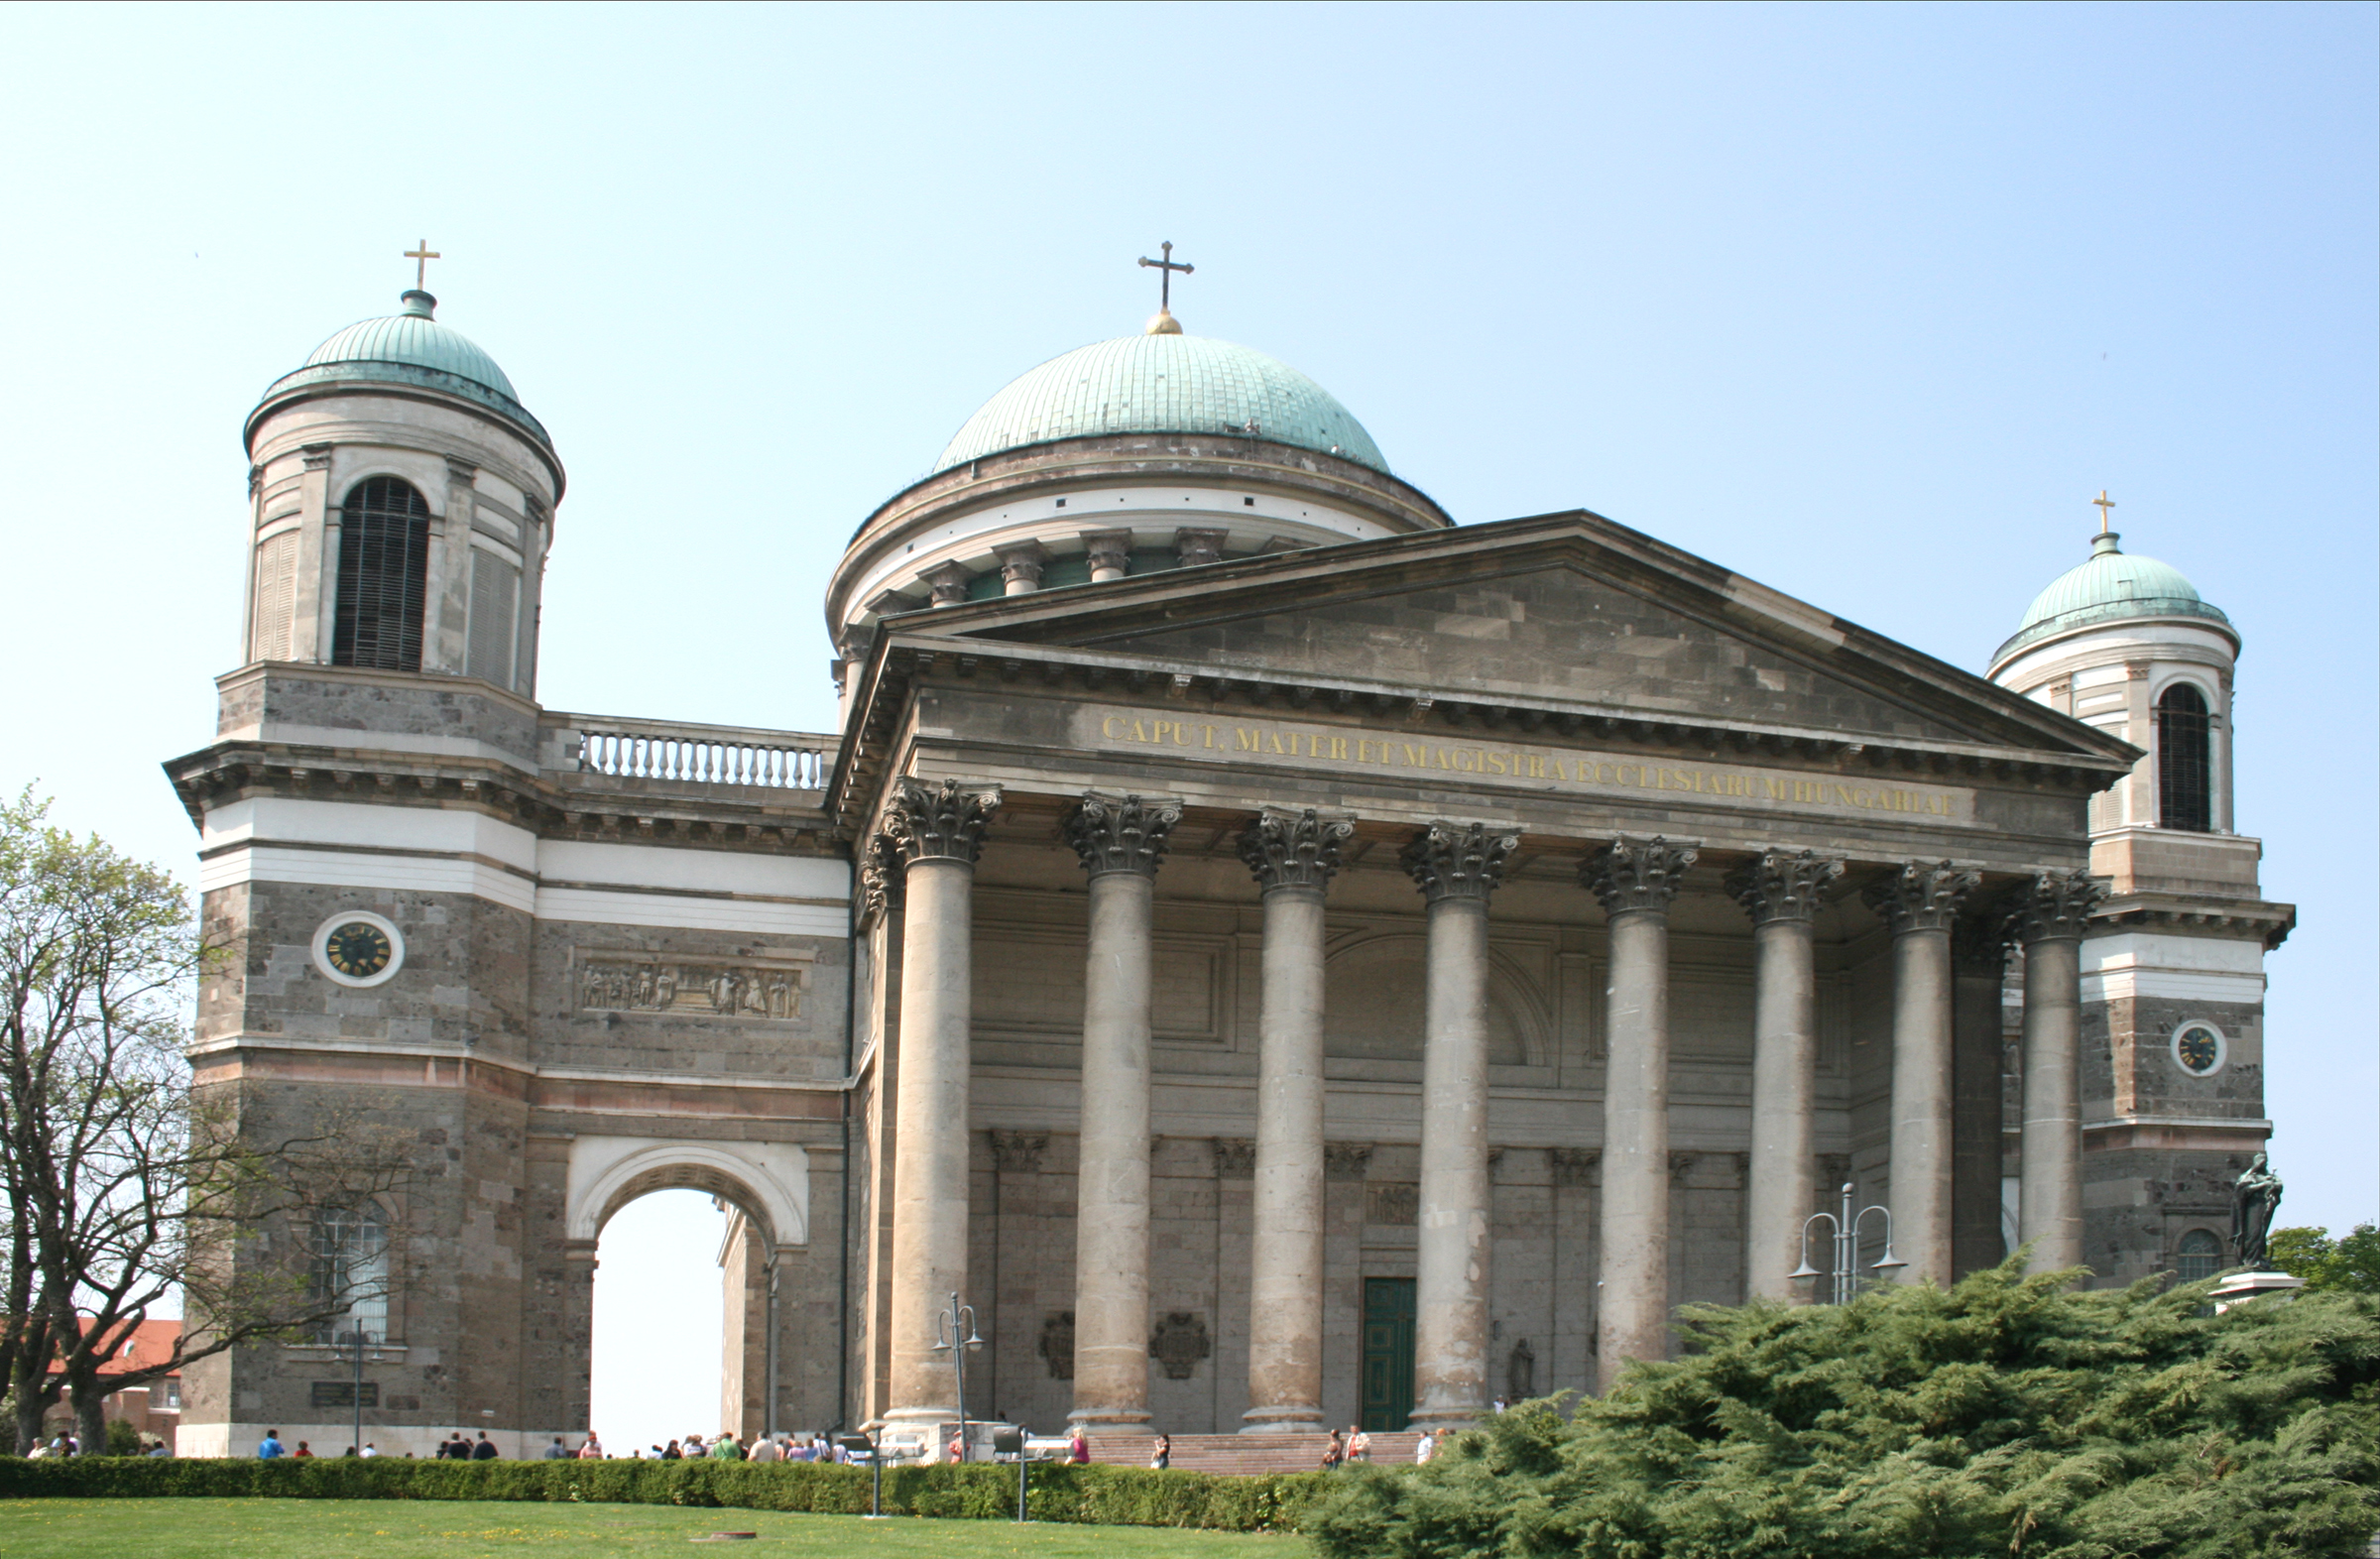 Esztergom Basilica #2